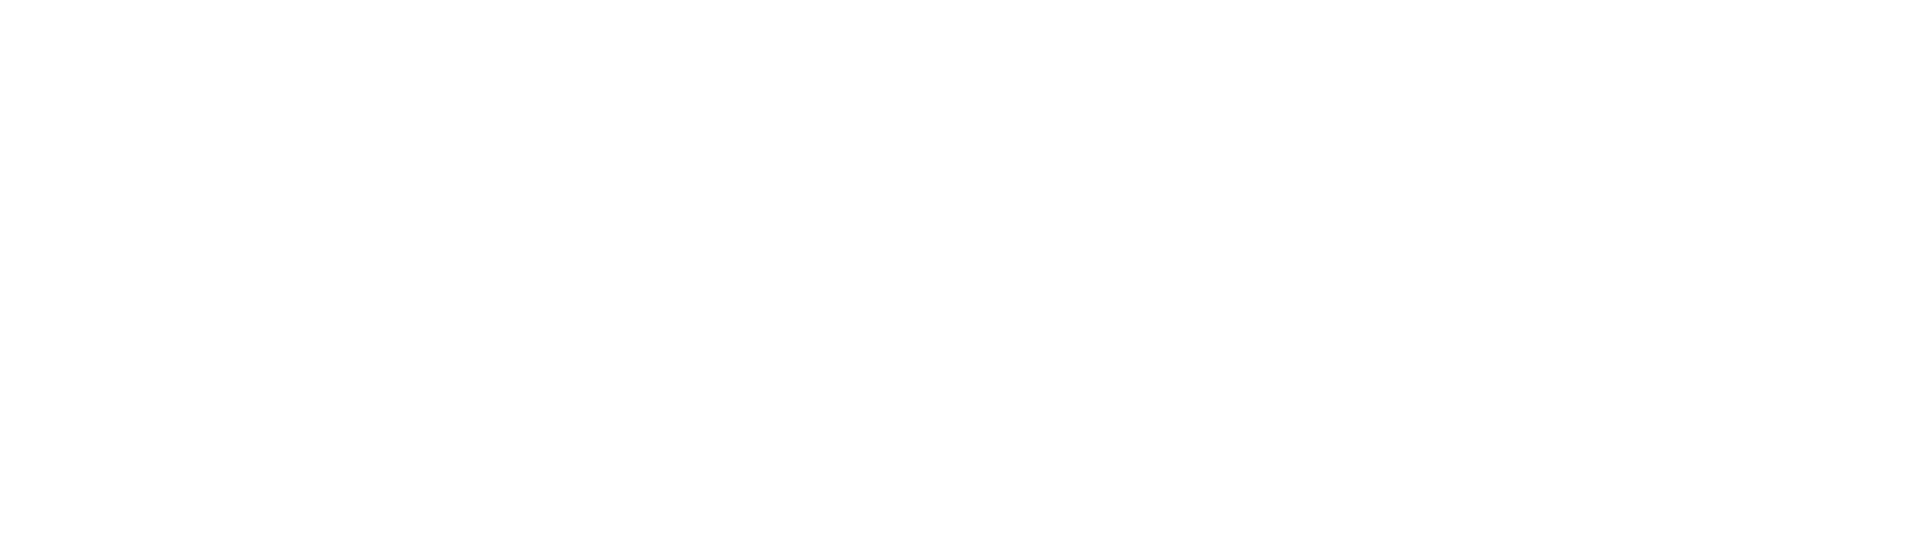 Investment Corner | Talal and Madiha Zein AUB-Innovation Park